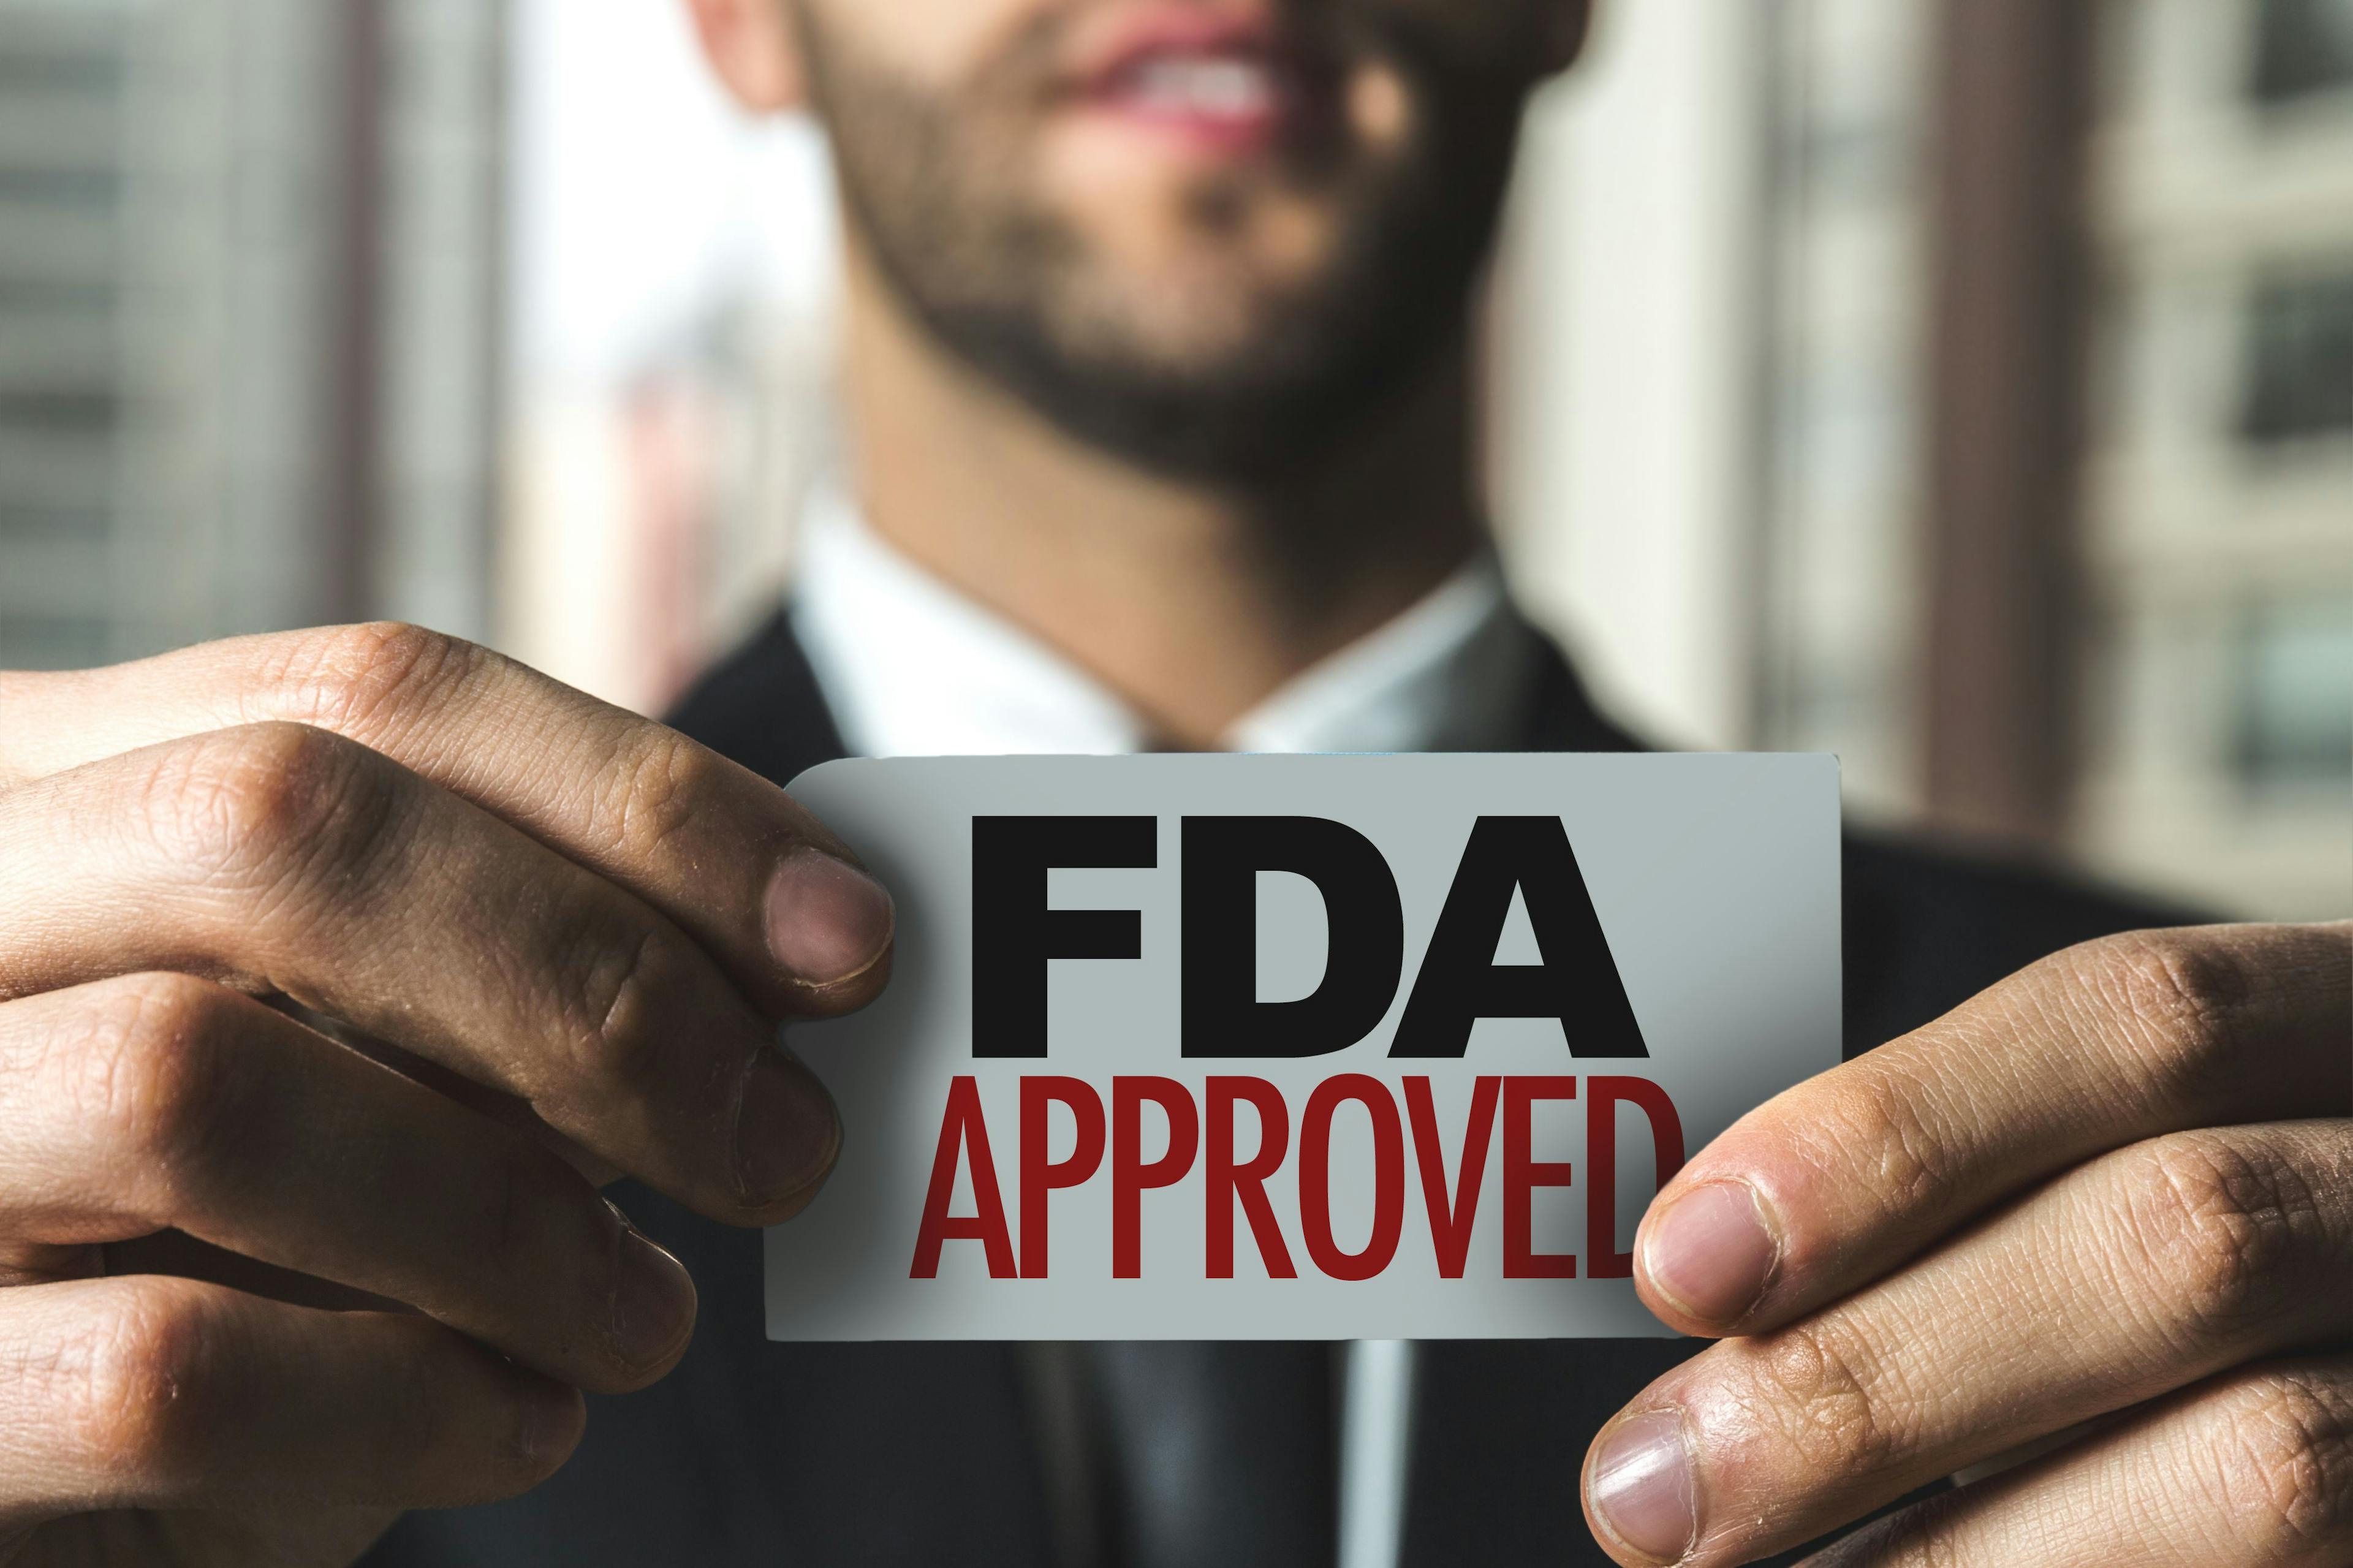 Guy holding paper "FDA Approved" | Image credit: gustavofrazao - stock.adobe.com